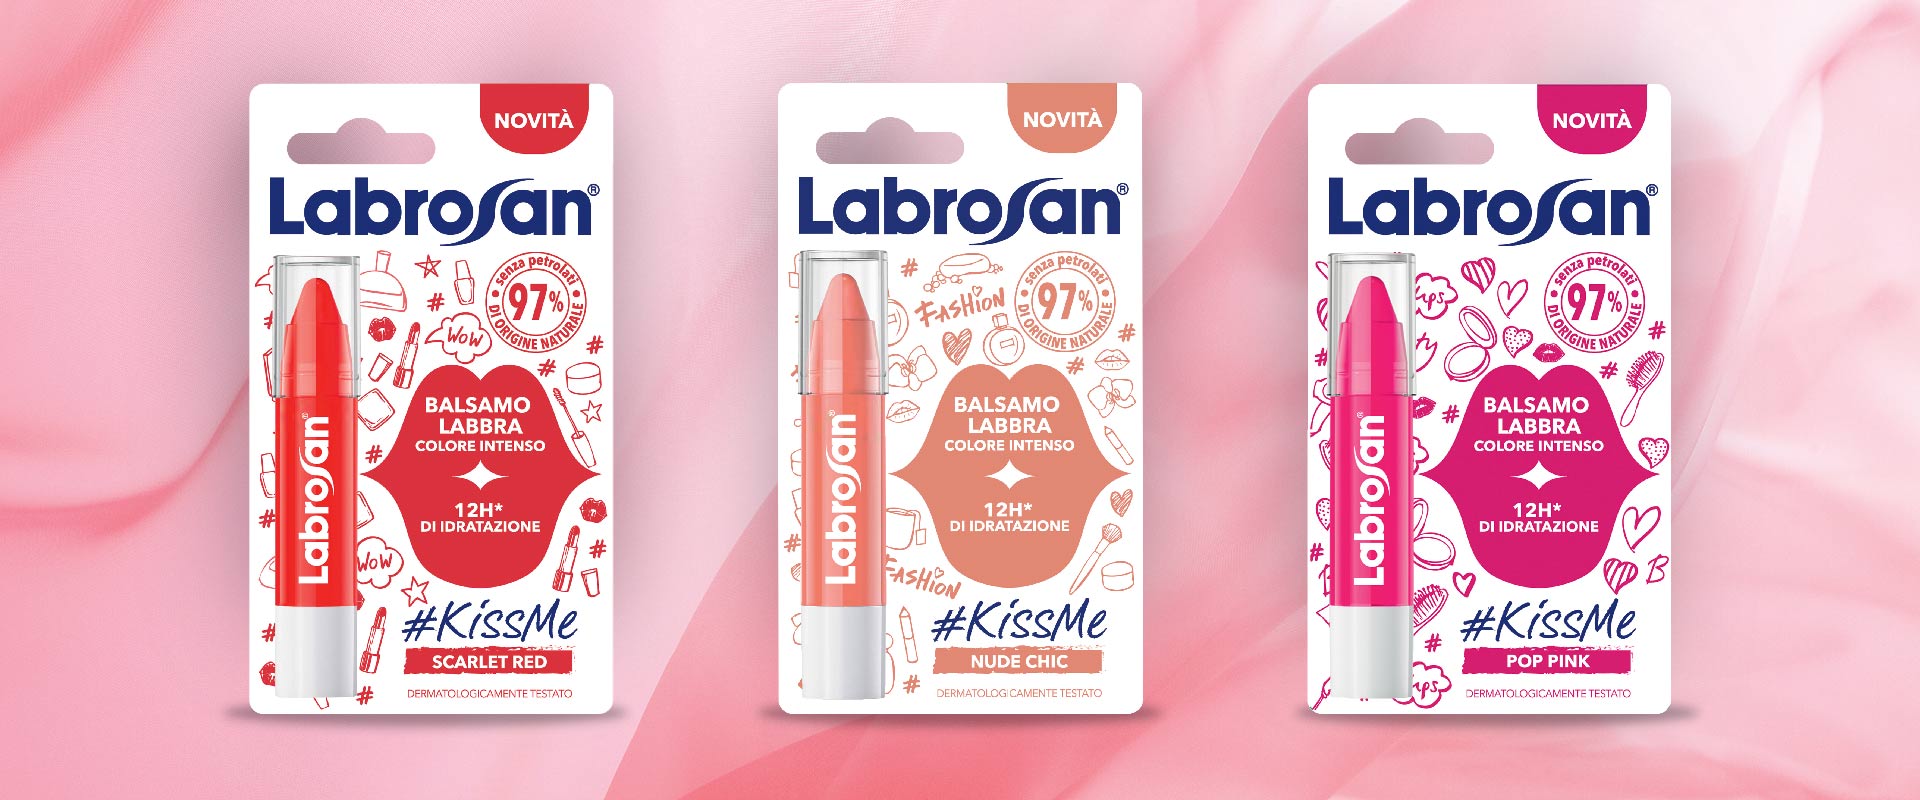 The new line “Kiss me” for Labrosan lip balms